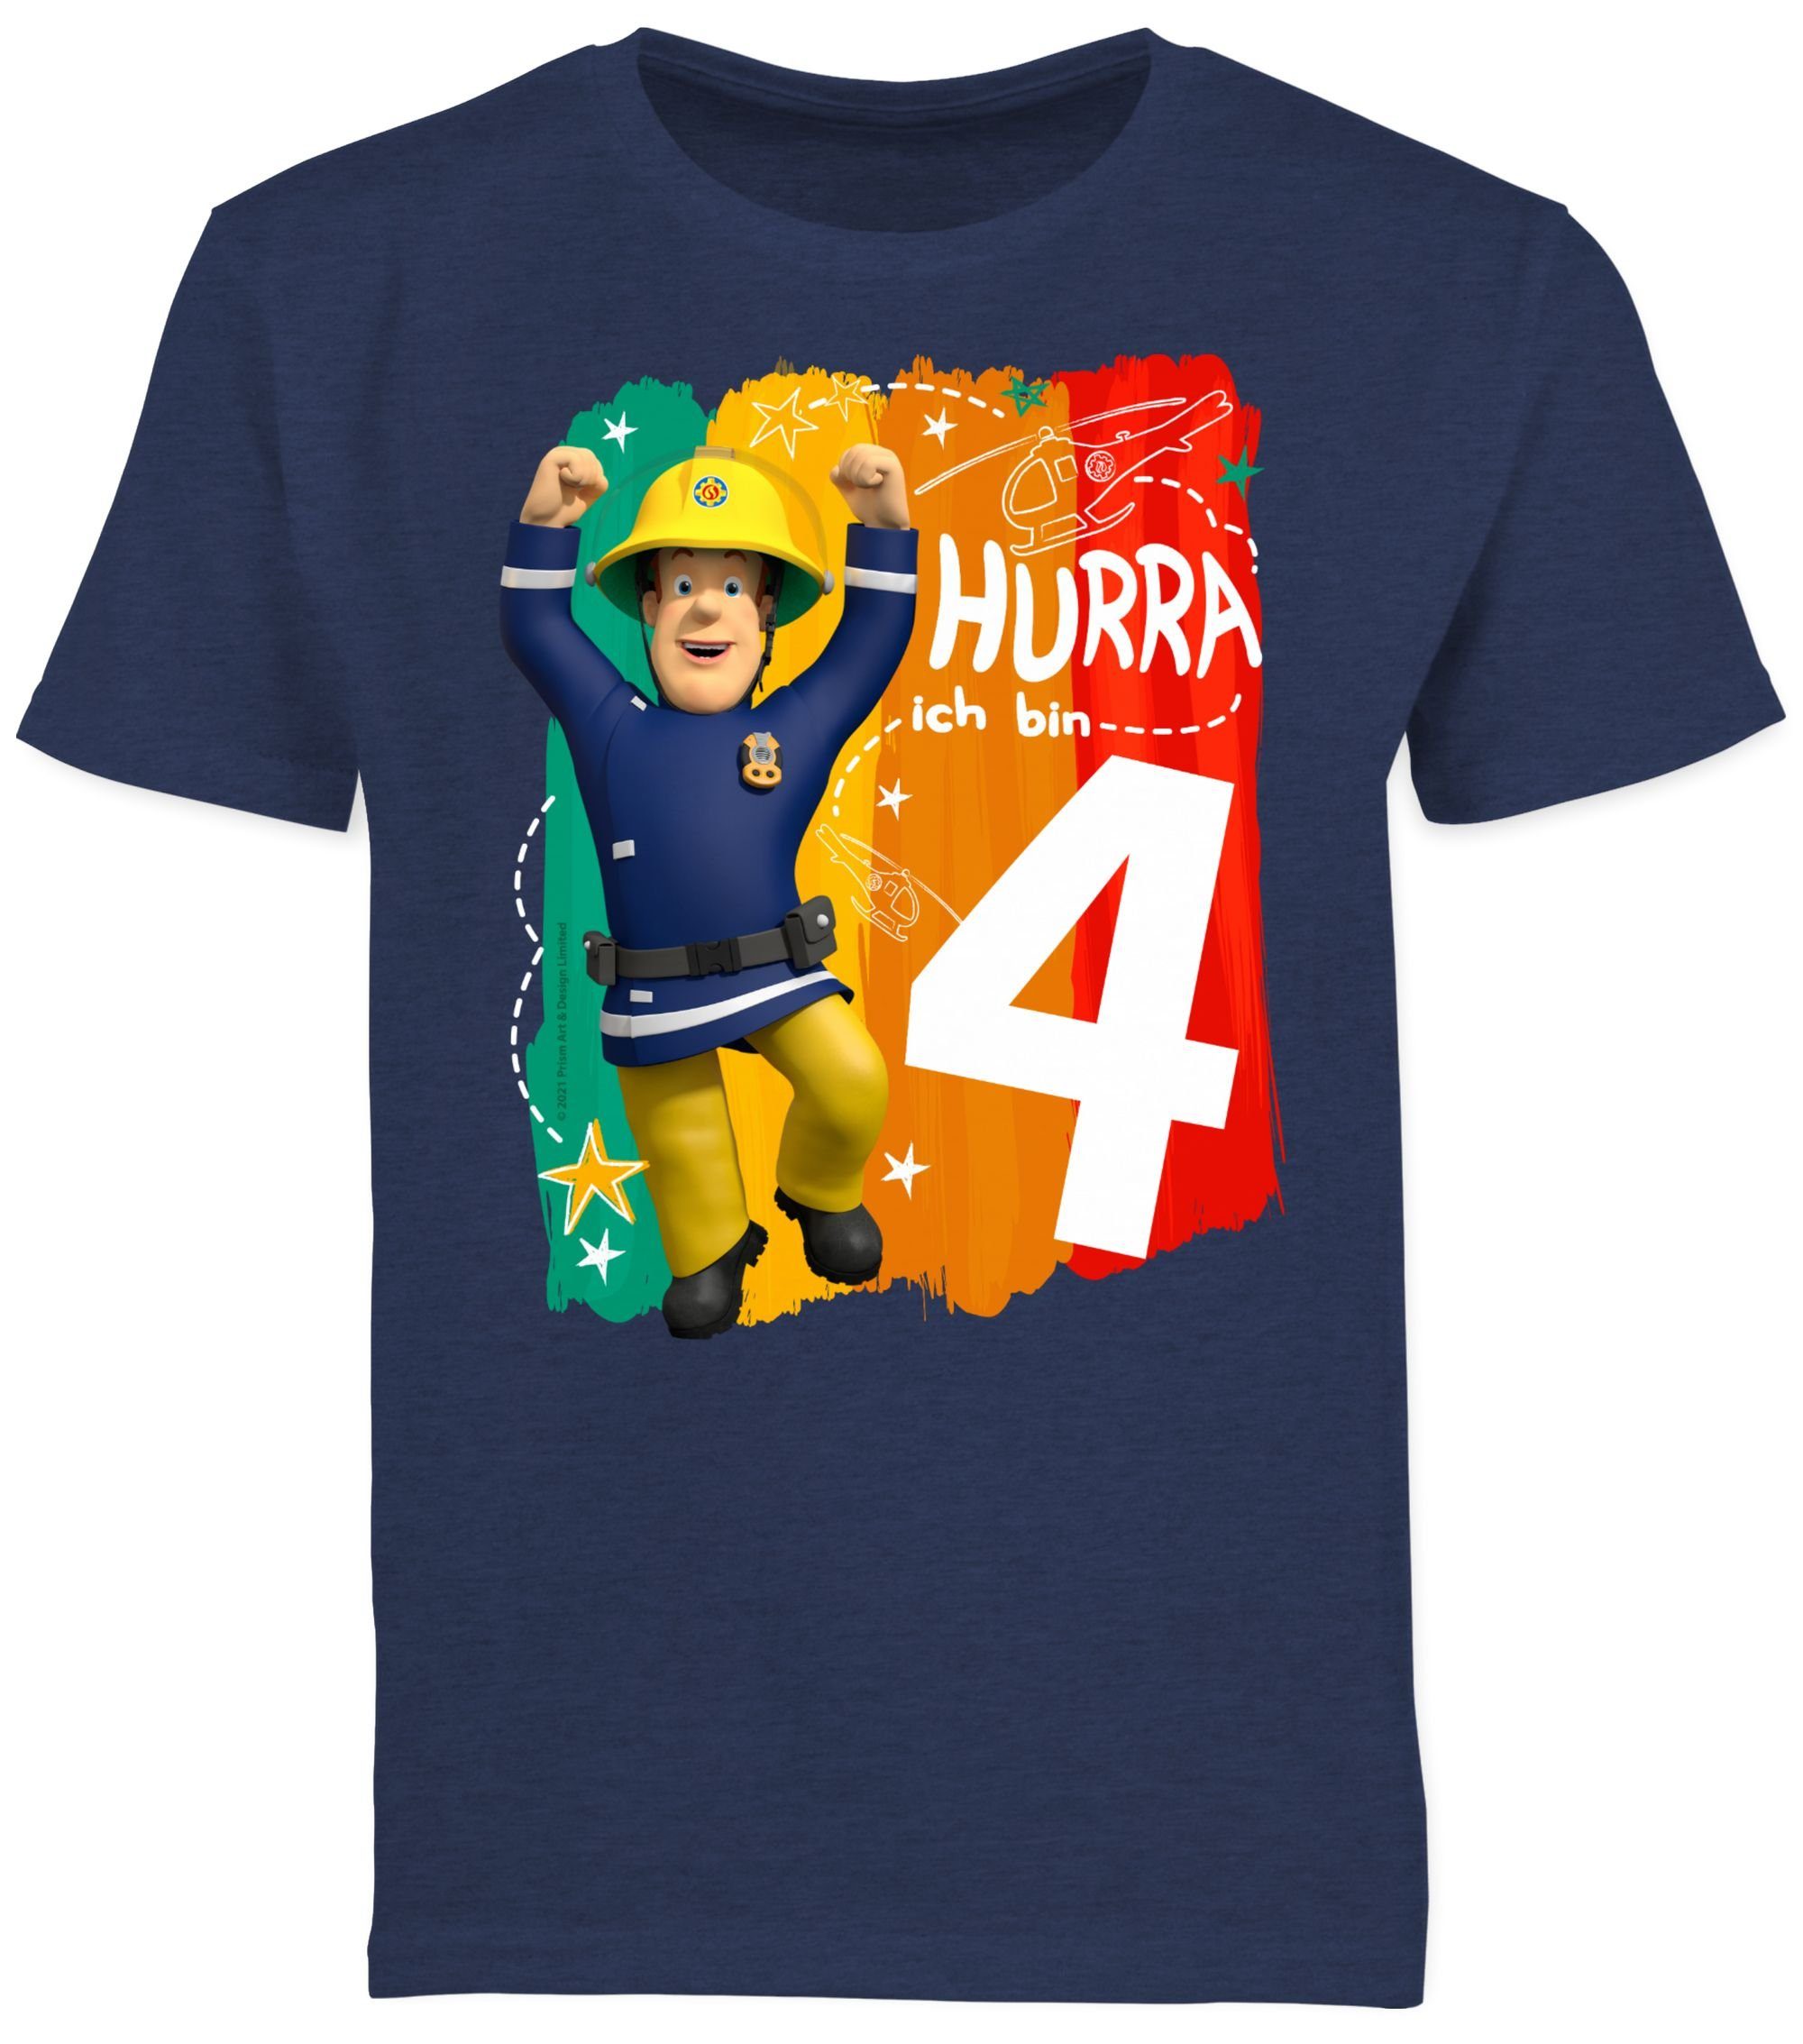 Shirtracer T-Shirt 02 ich bin Dunkelblau - Meliert Sam Feuerwehrmann Jungen Hurra Sam Vier